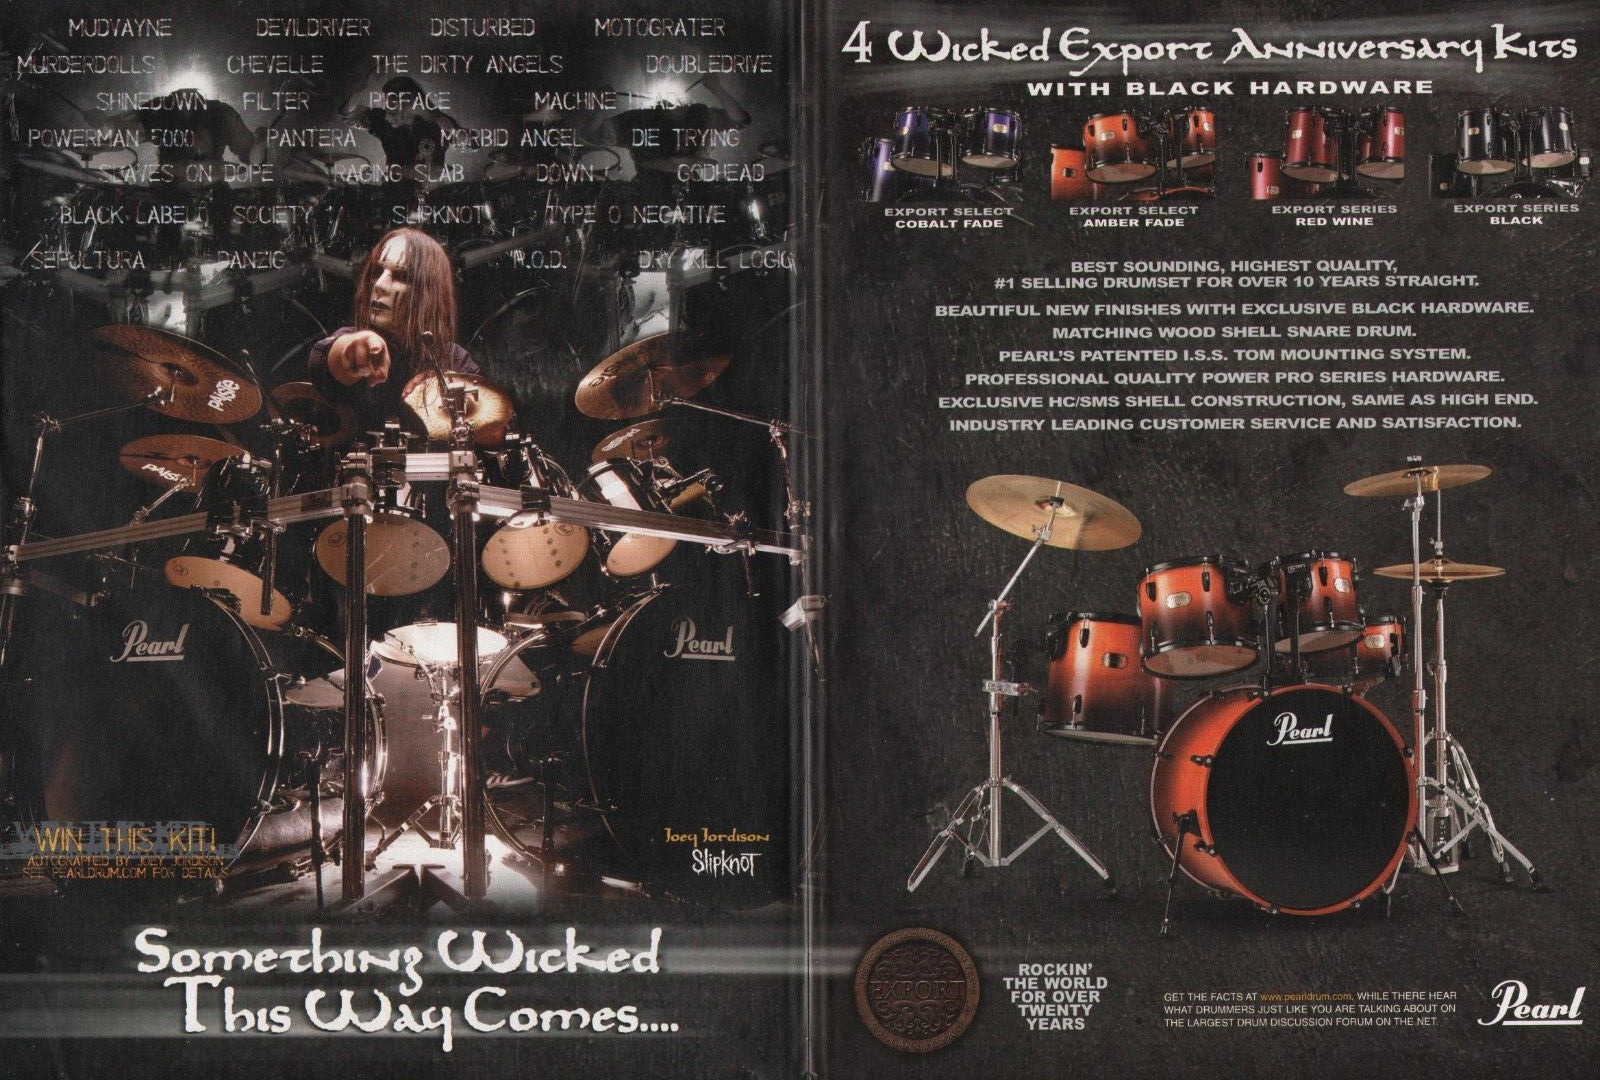 2004 2pg Print Ad of Pearl Export Anniversary Drum Kit w Joey Jordison Slipknot